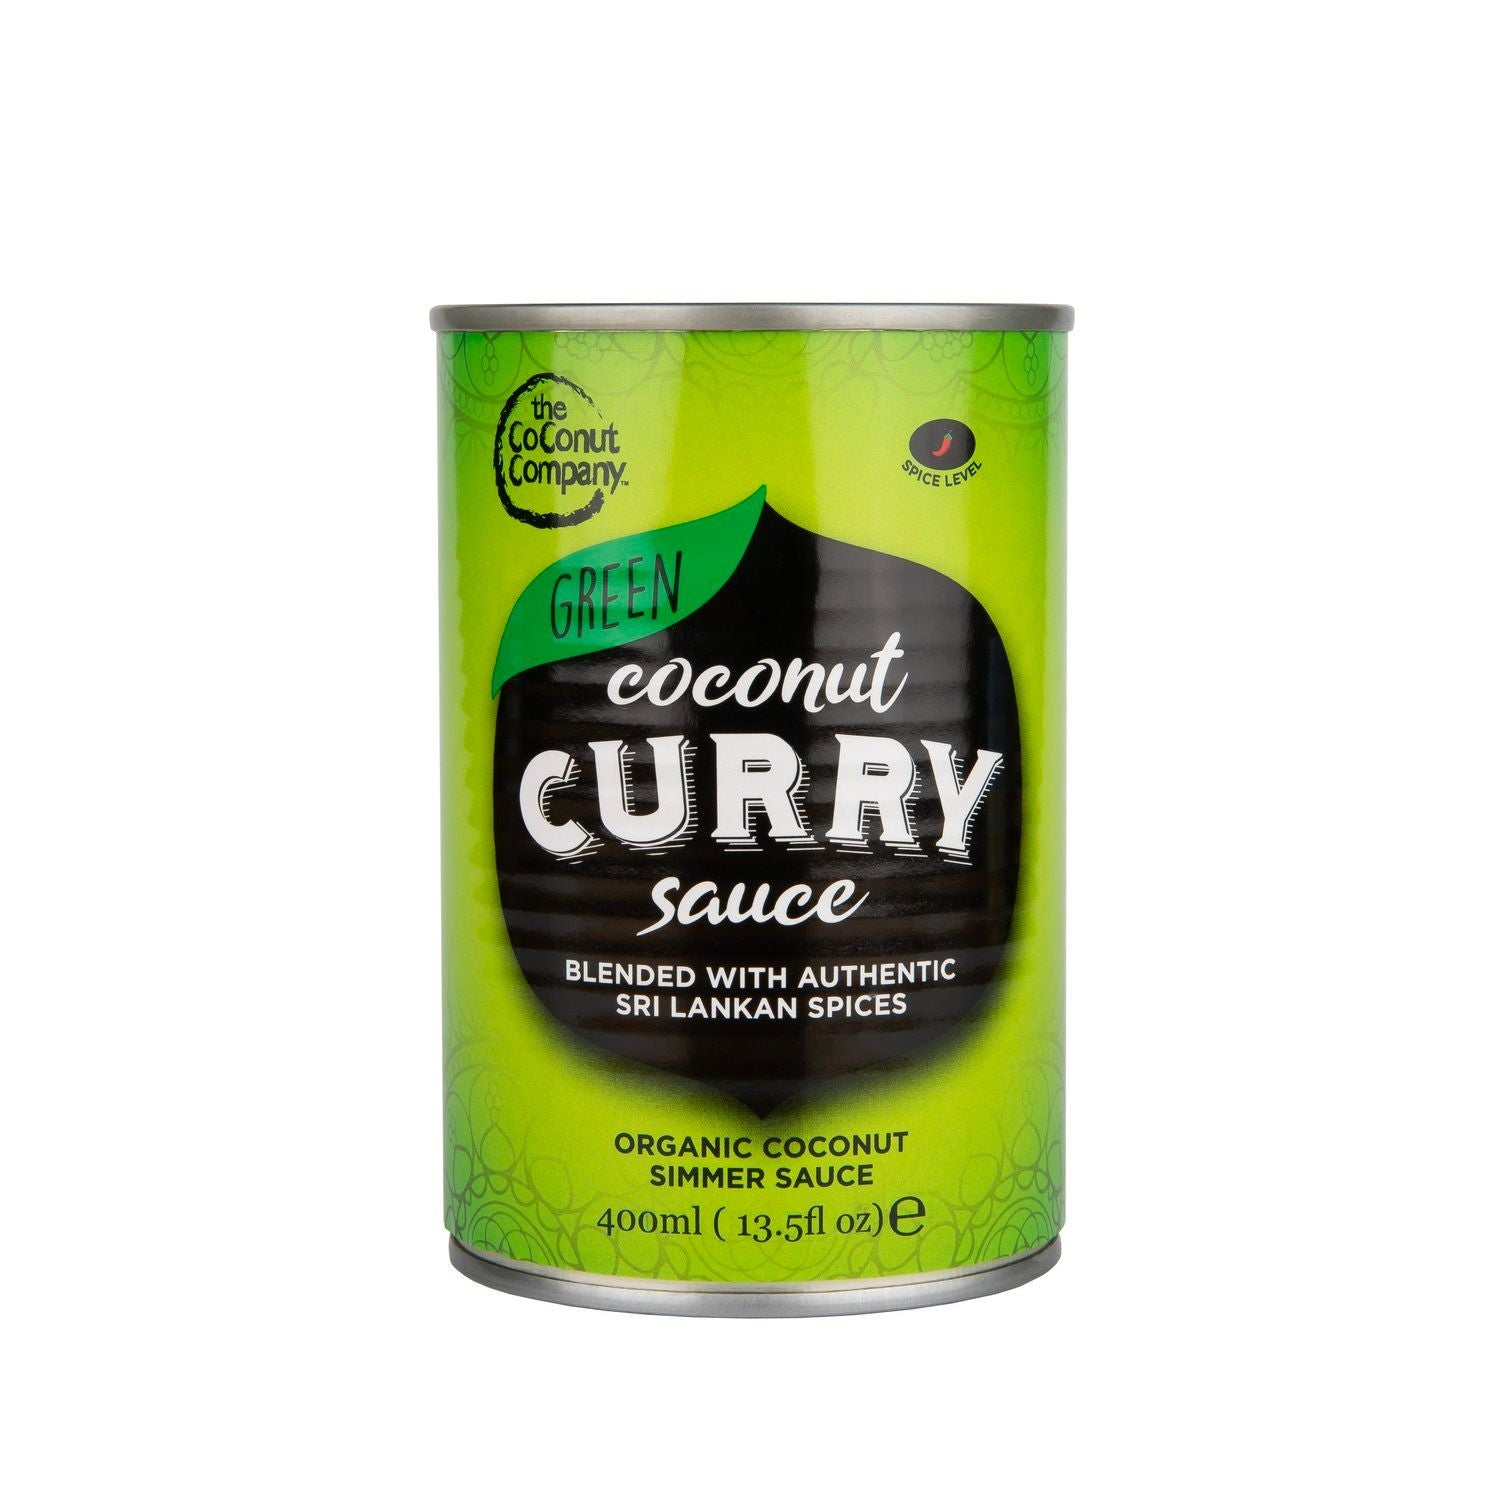 Organic Green Coconut Curry Sauce - 400ml BPA-free Can